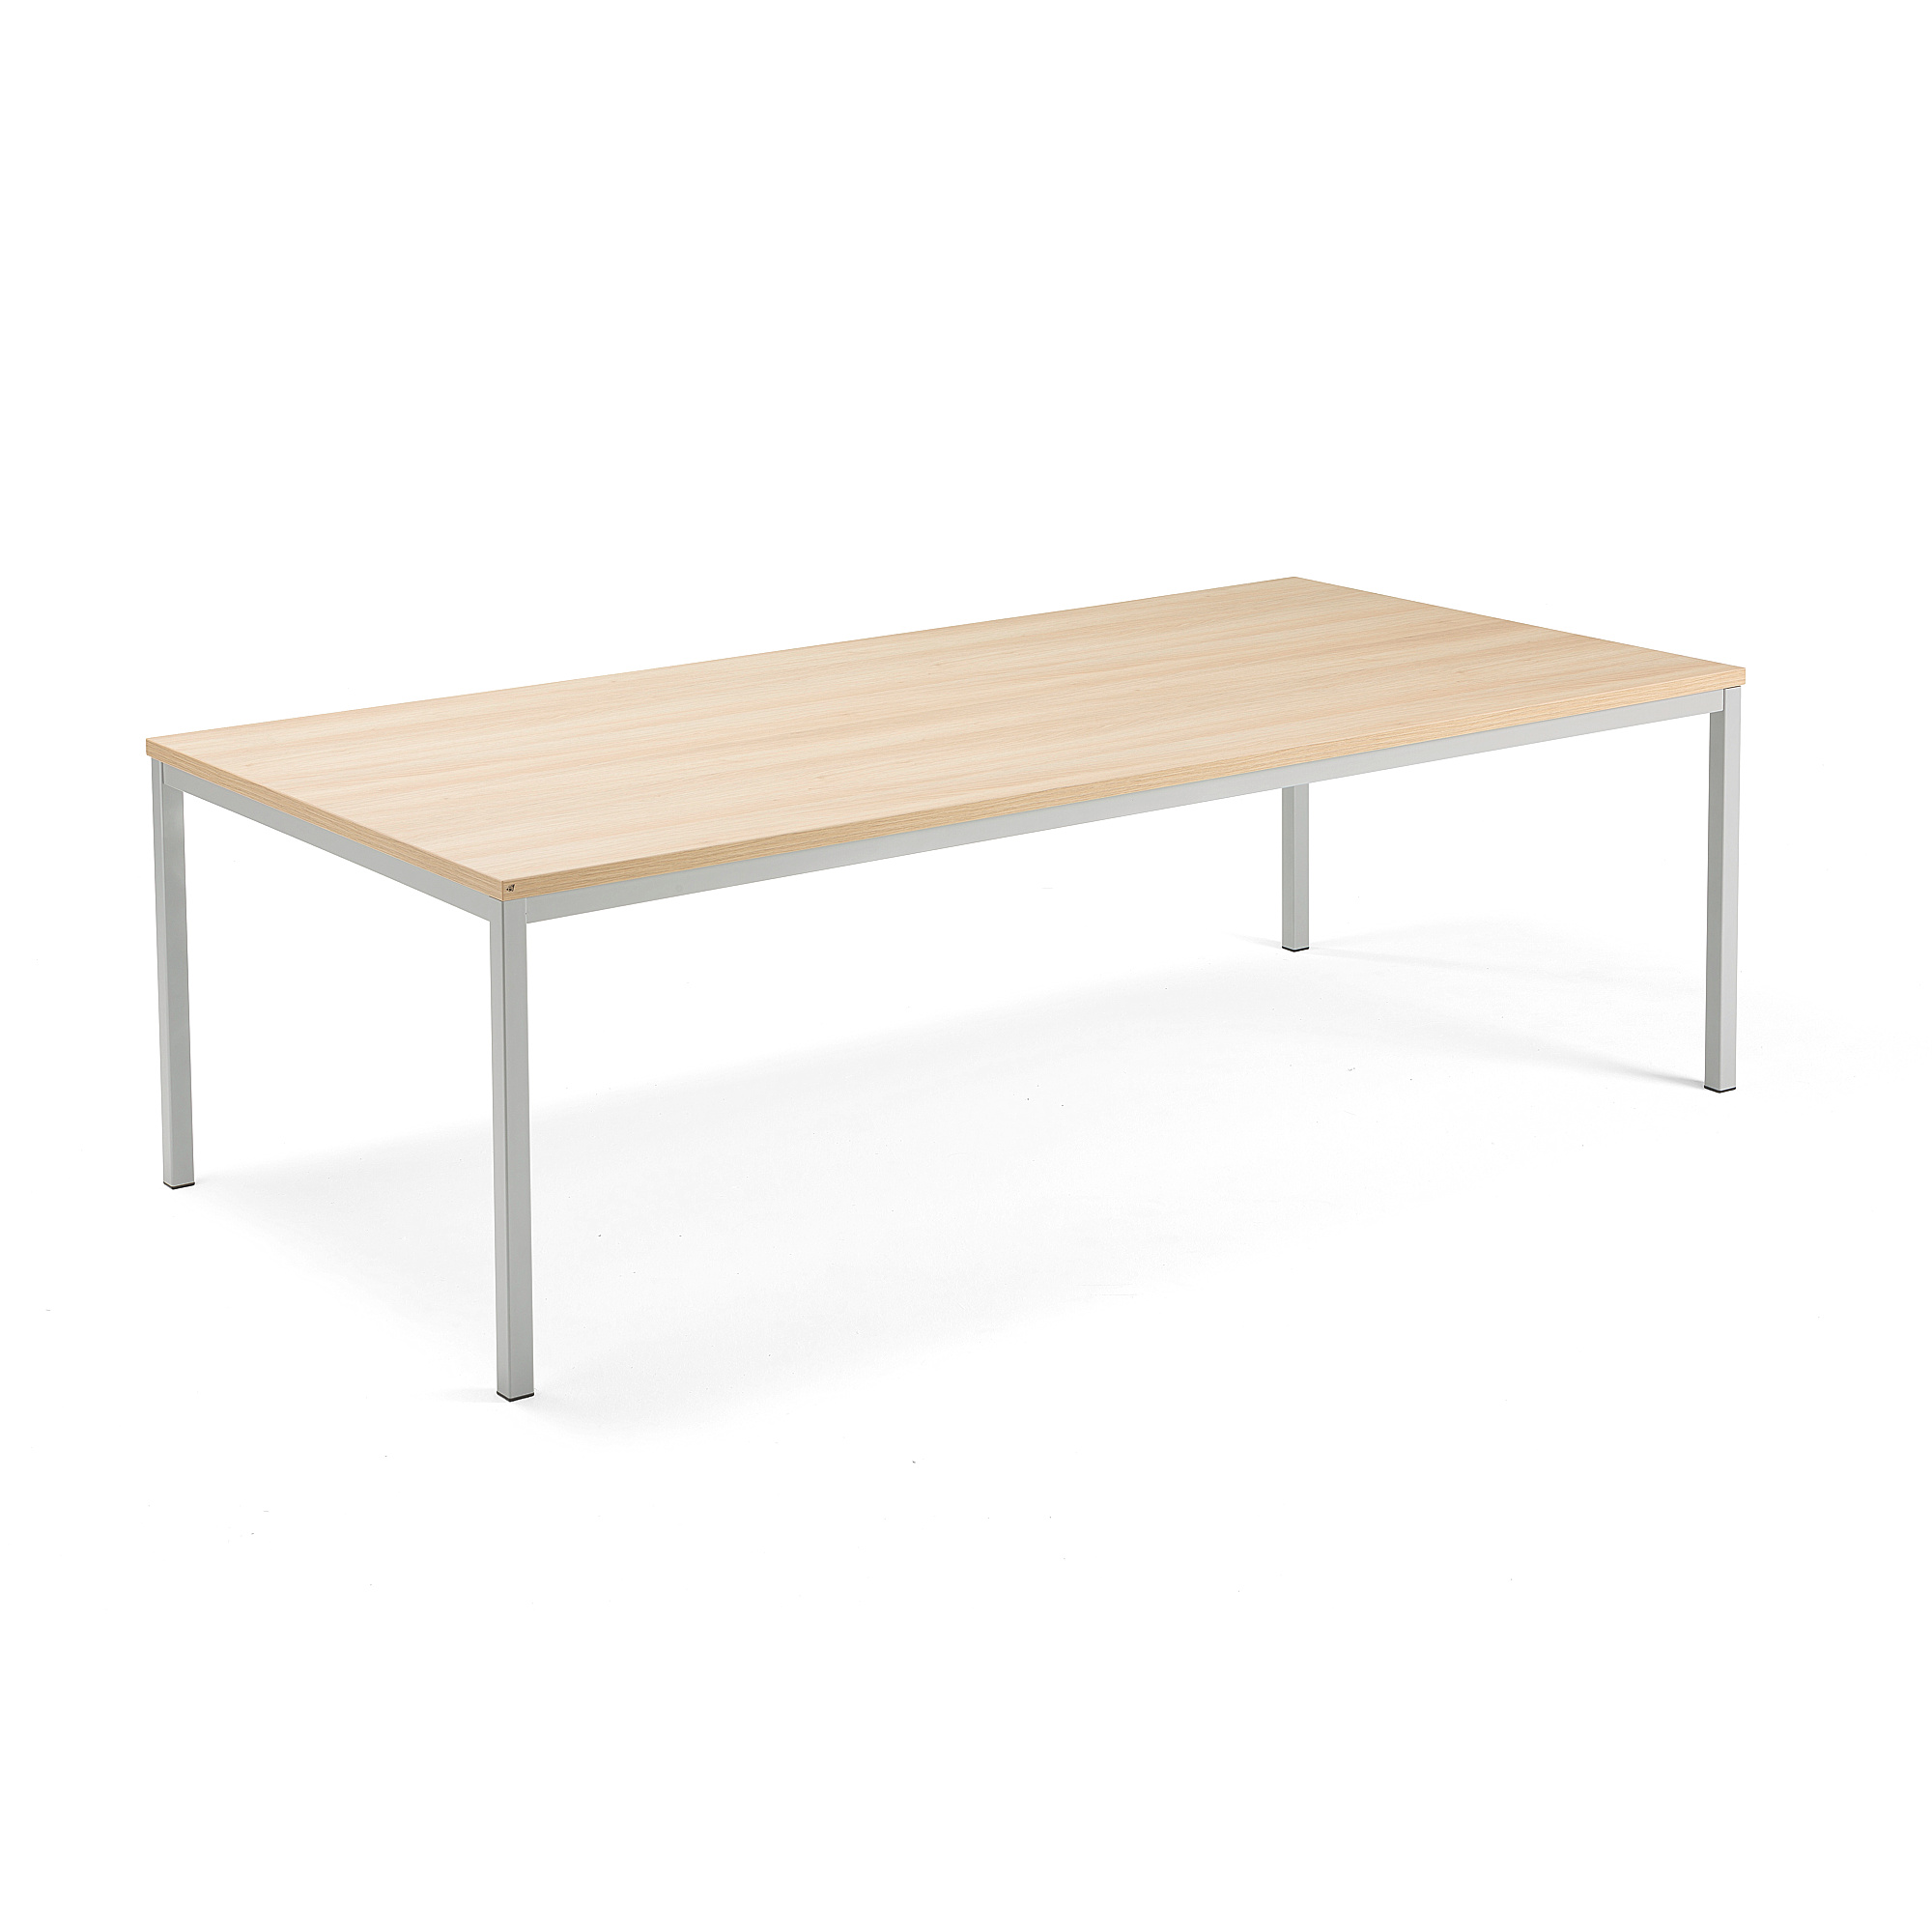 Jednací stůl QBUS, 2400x1200 mm, 4 nohy, stříbrný rám, dub